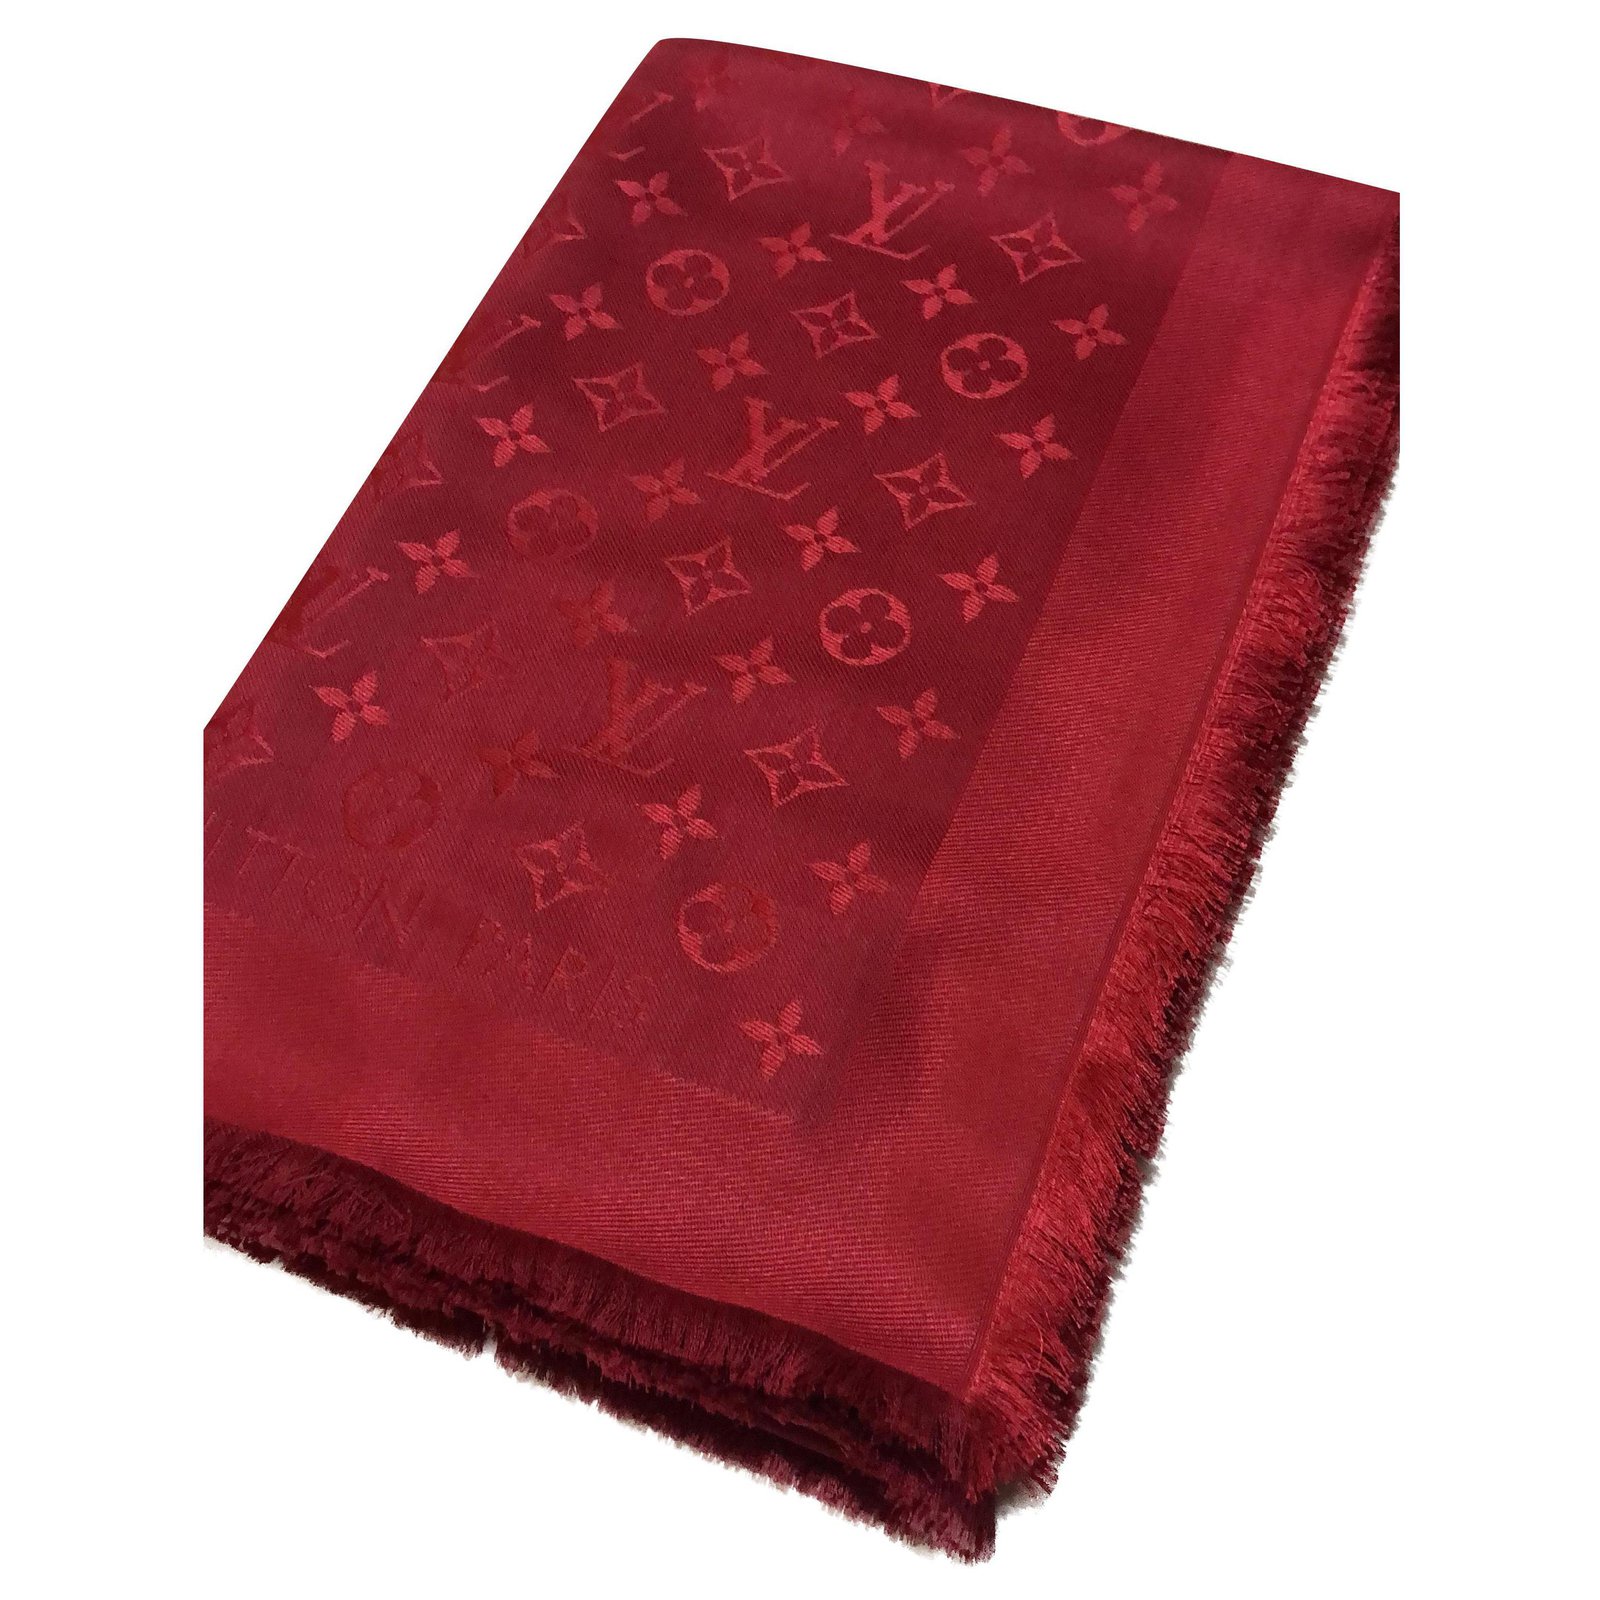 vuitton monogram scarf red